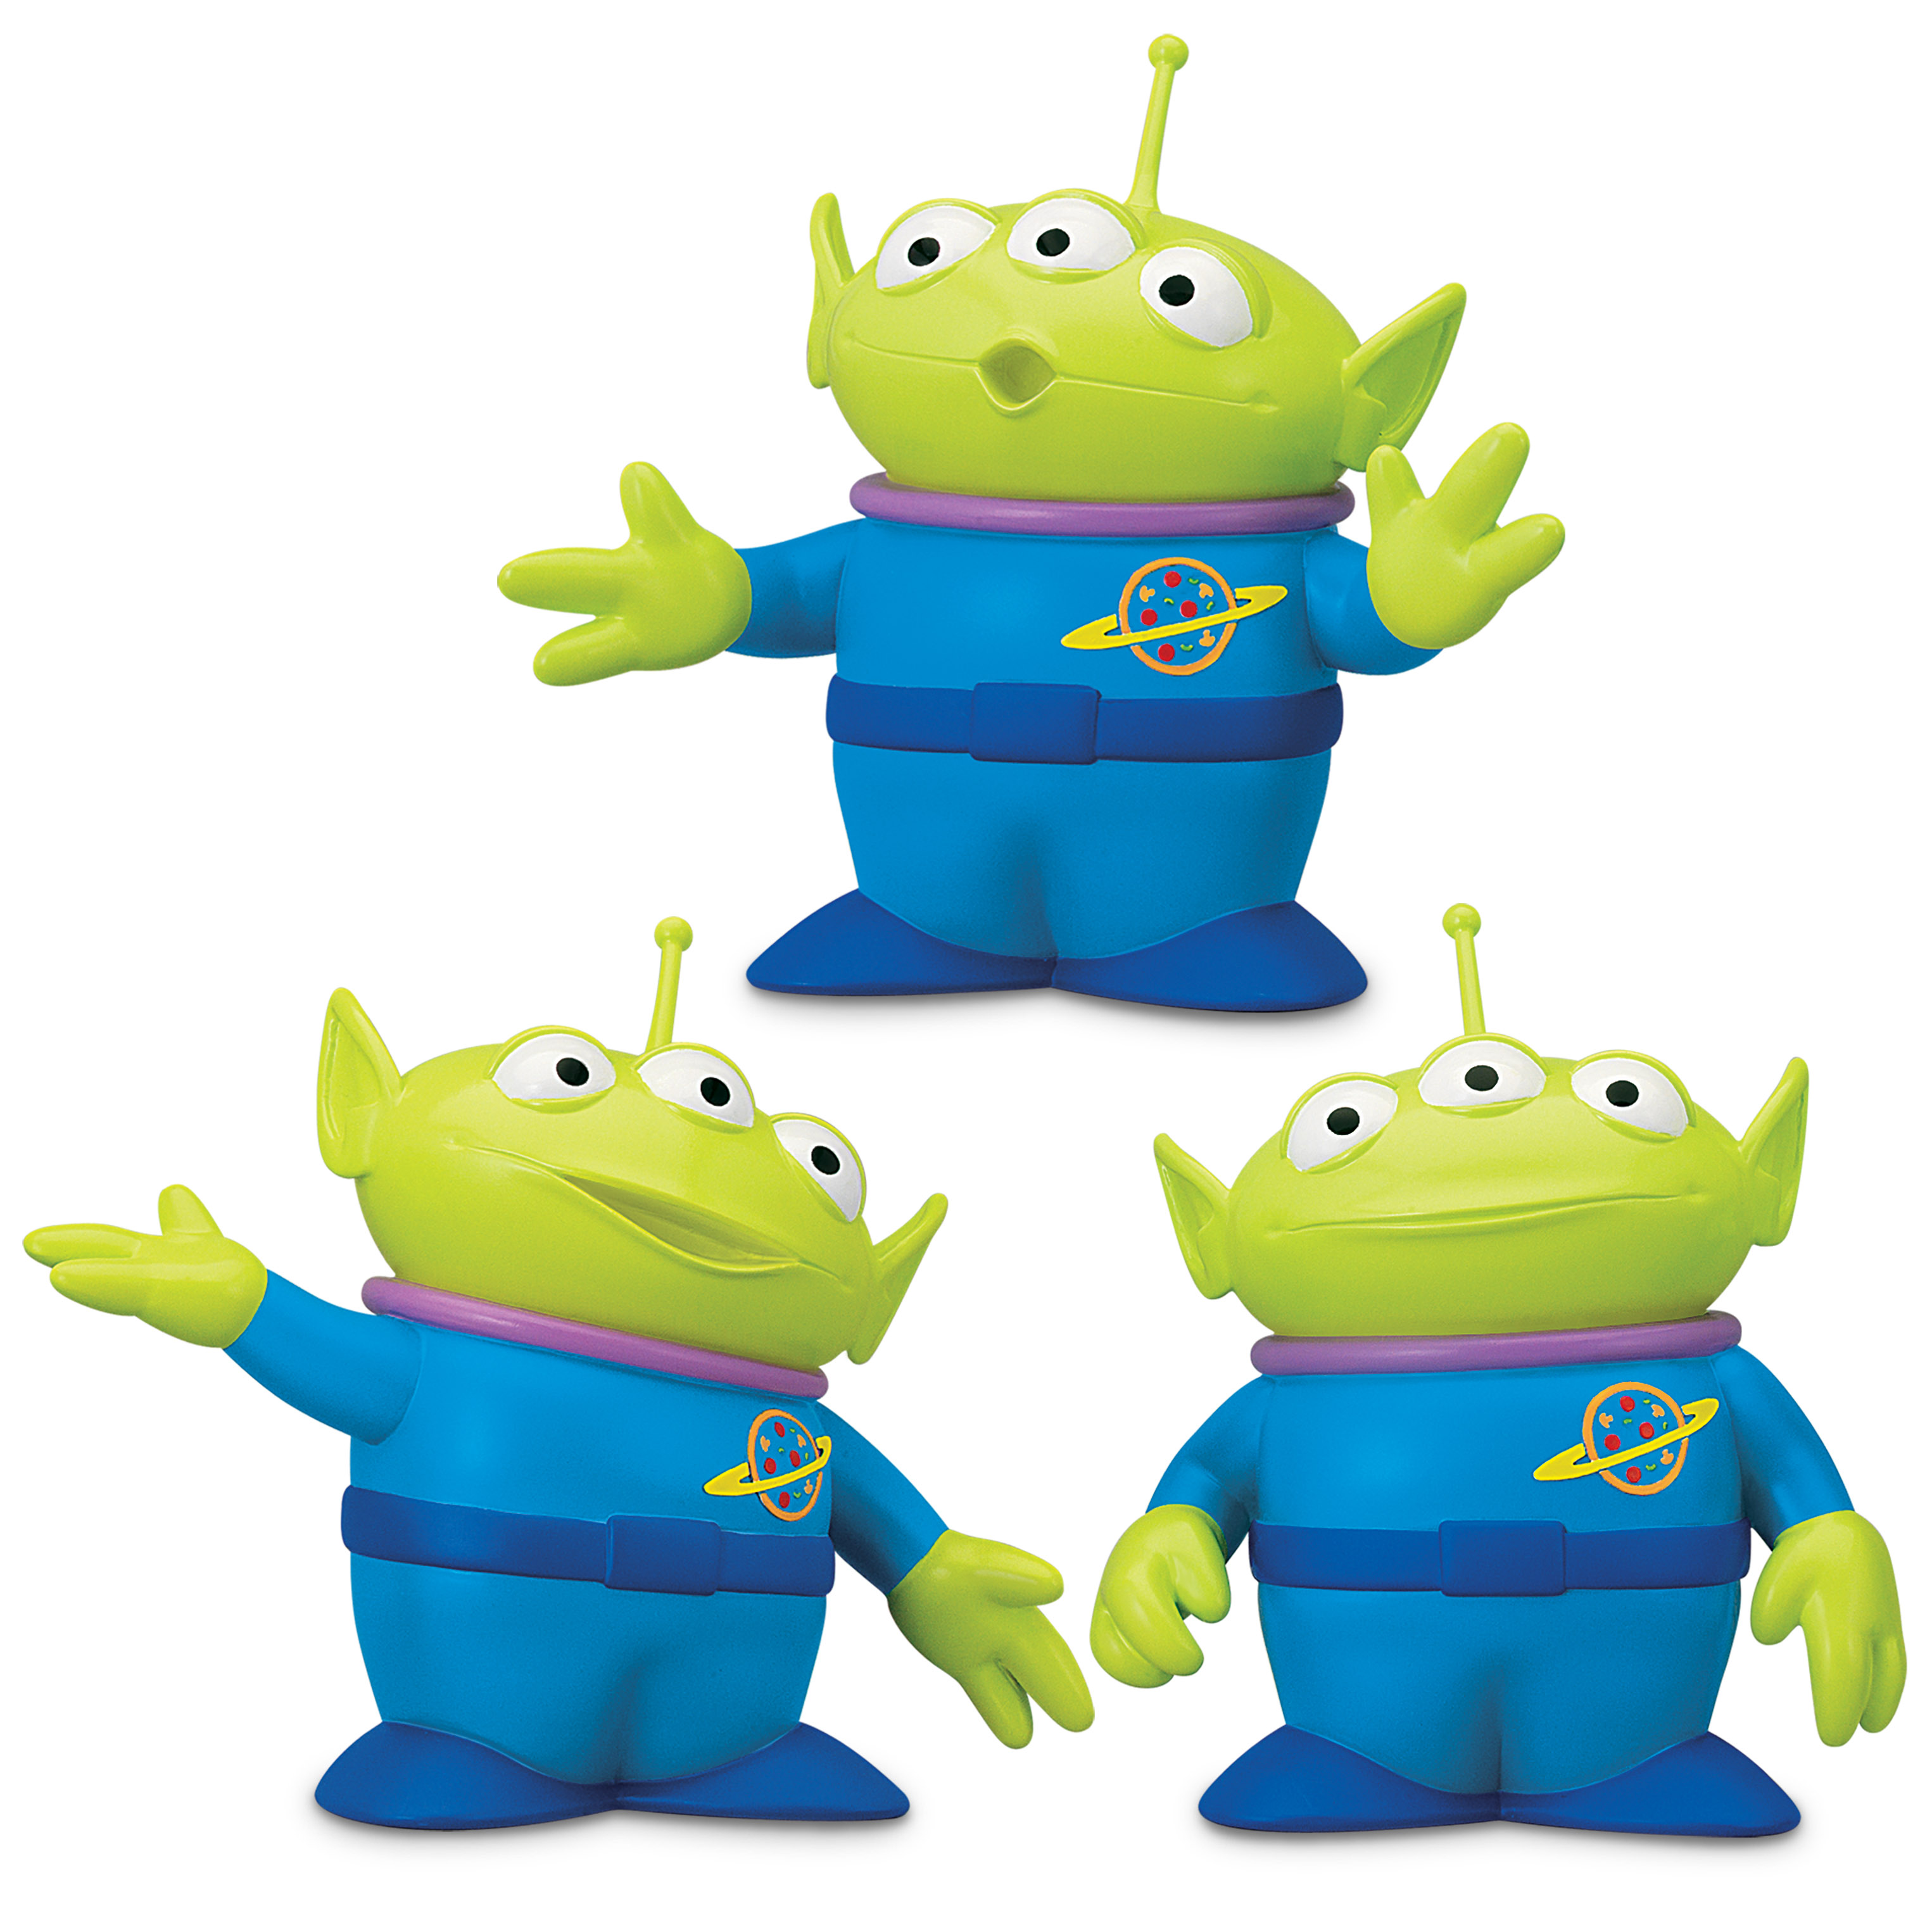 Disney Pixar Toy Story Space Alien Assortment